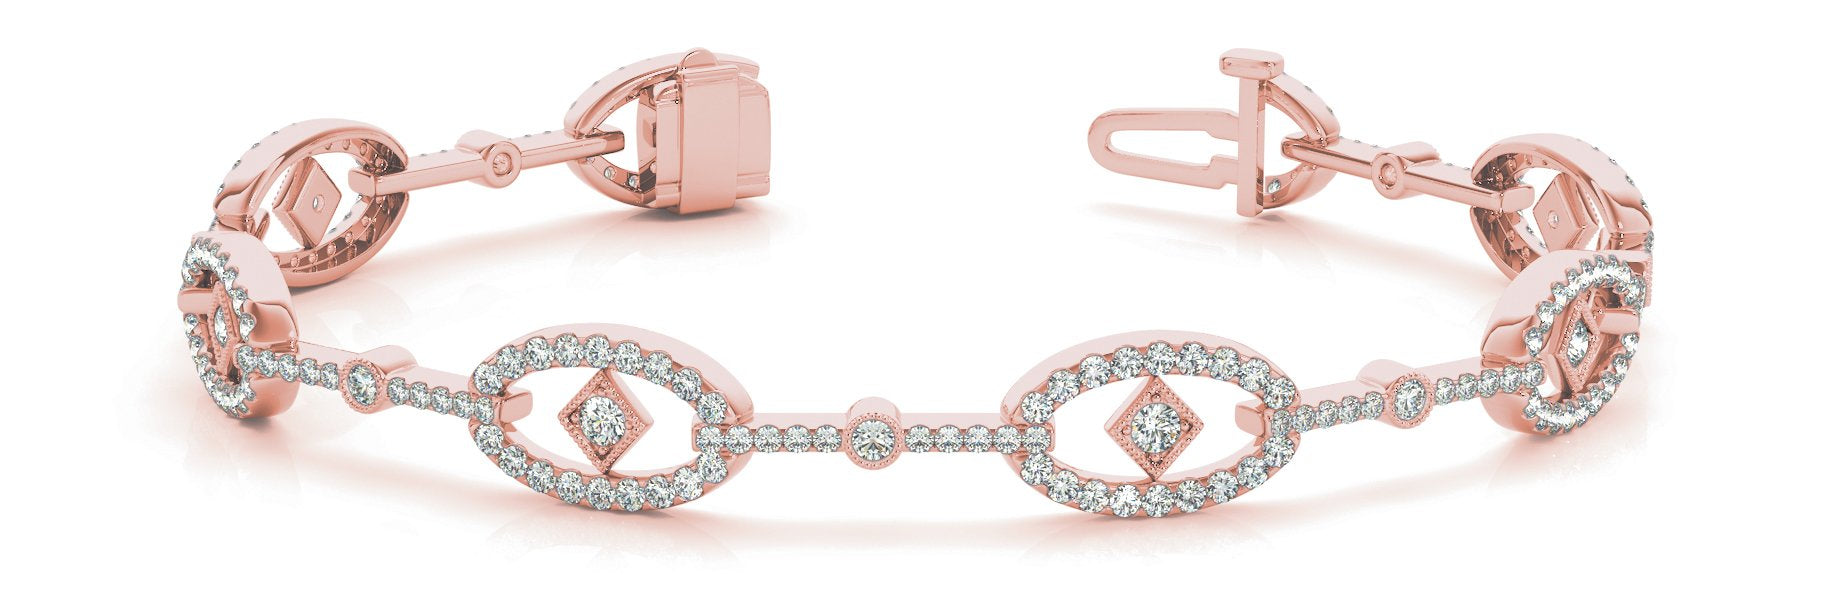 Fancy Diamond Bracelet Ladies 2.19ct tw - 14kt Rose Gold